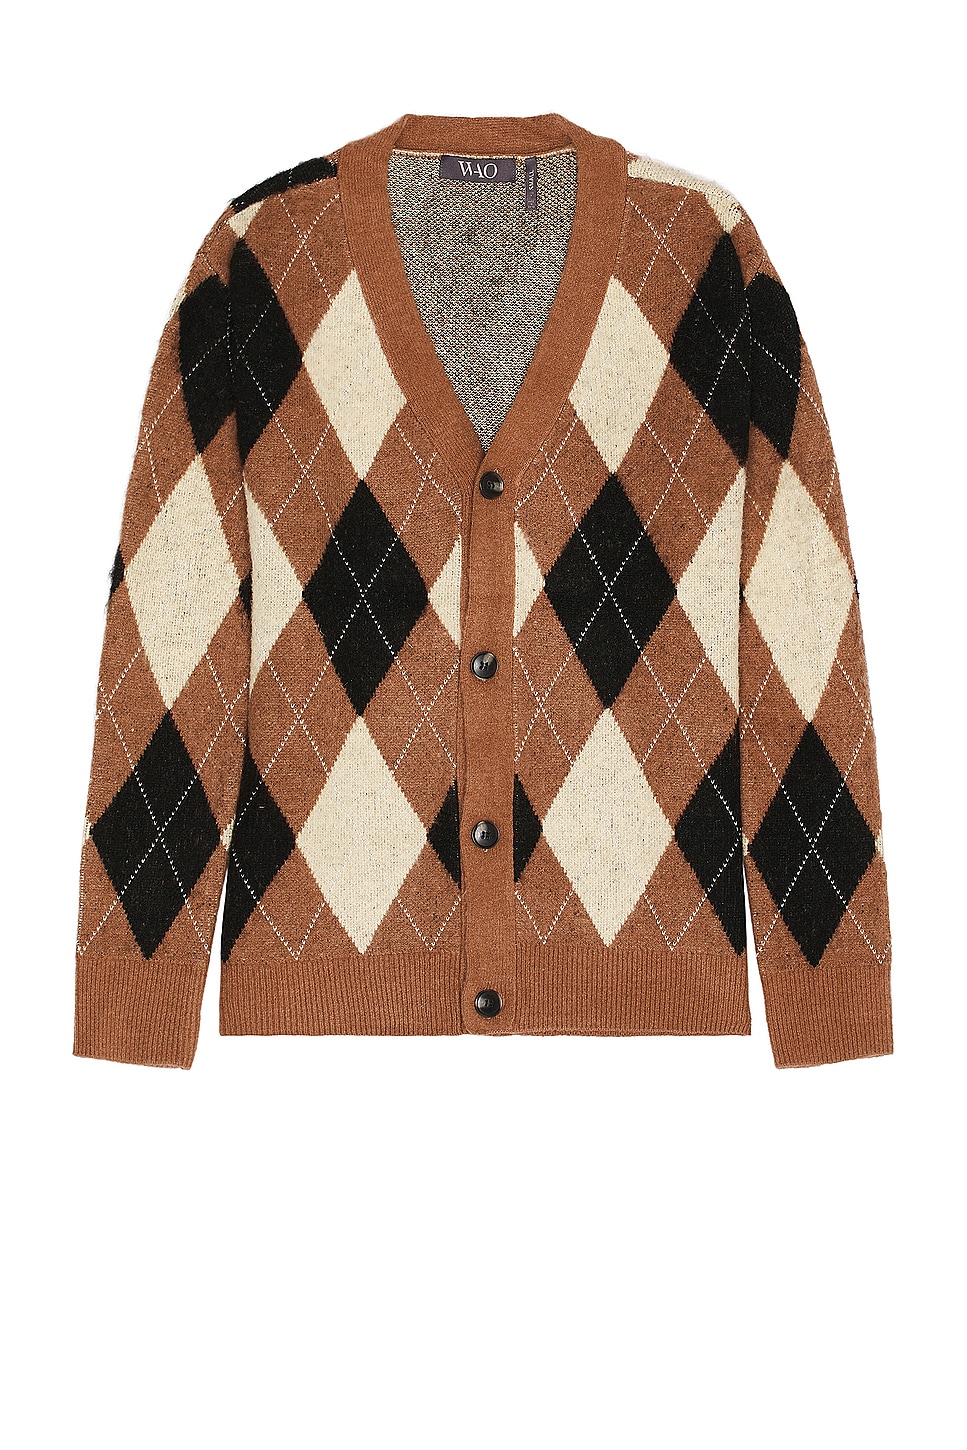 Image 1 of WAO Argyle Sweater Cardigan in Brown & Cream